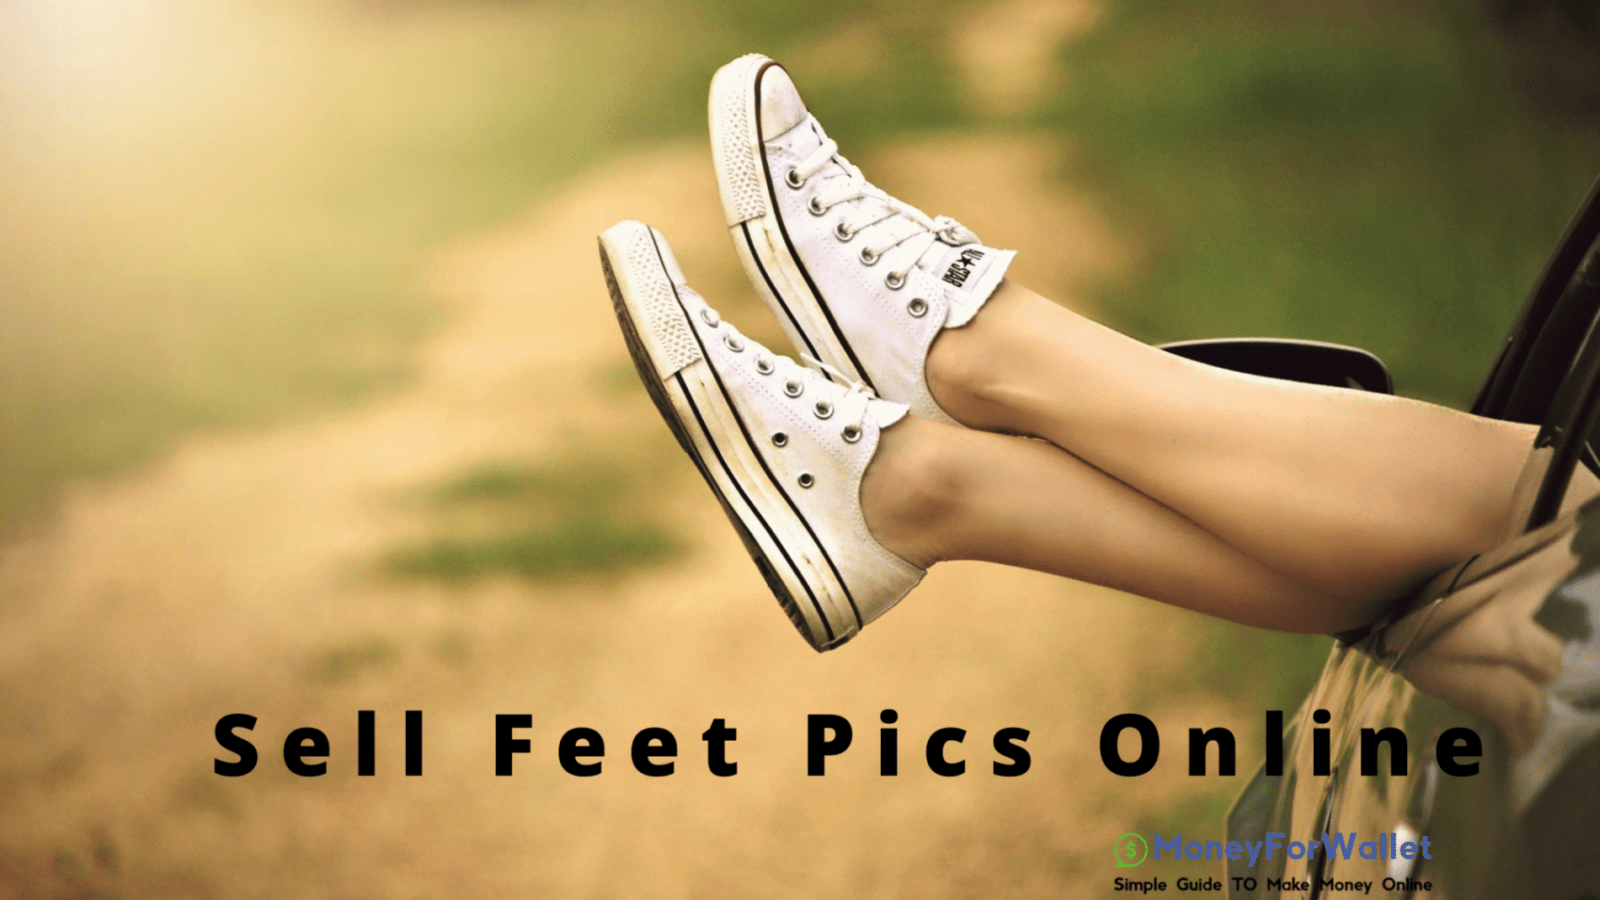 For feet onlyfans pics ideas bio Onlyfans Bio